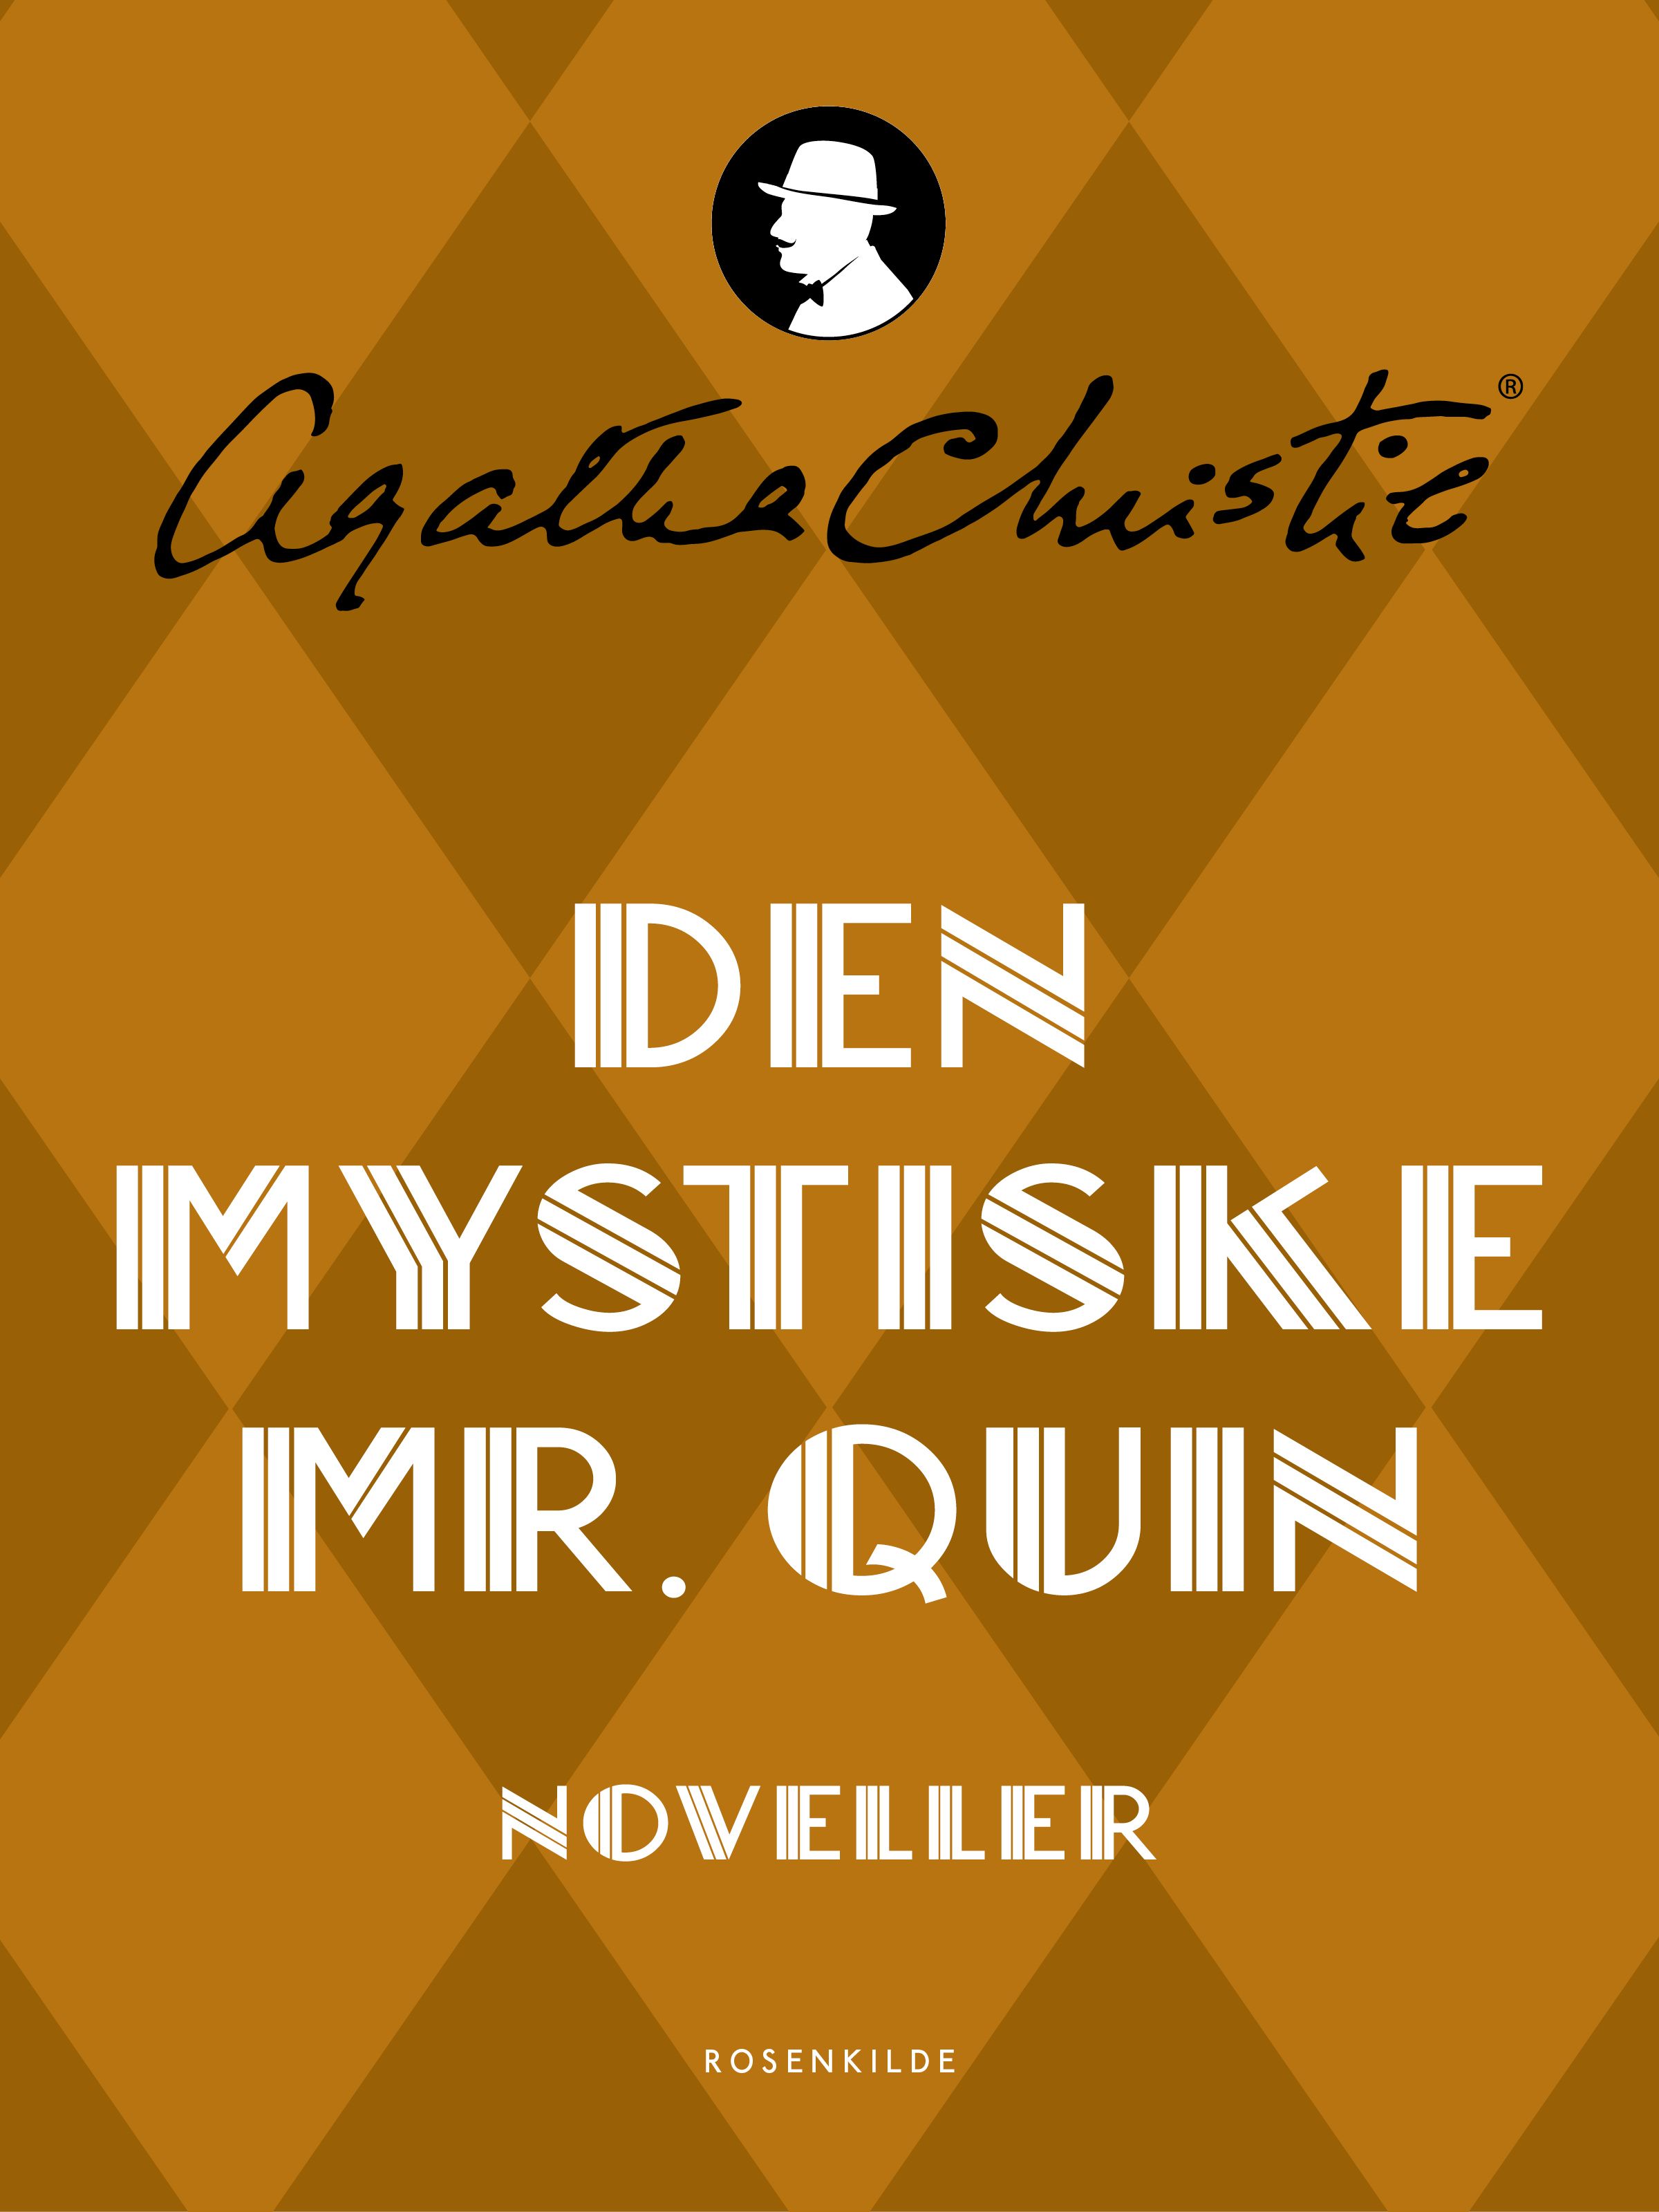 Den mystiske mr Quin, ljudbok av Agatha Christie